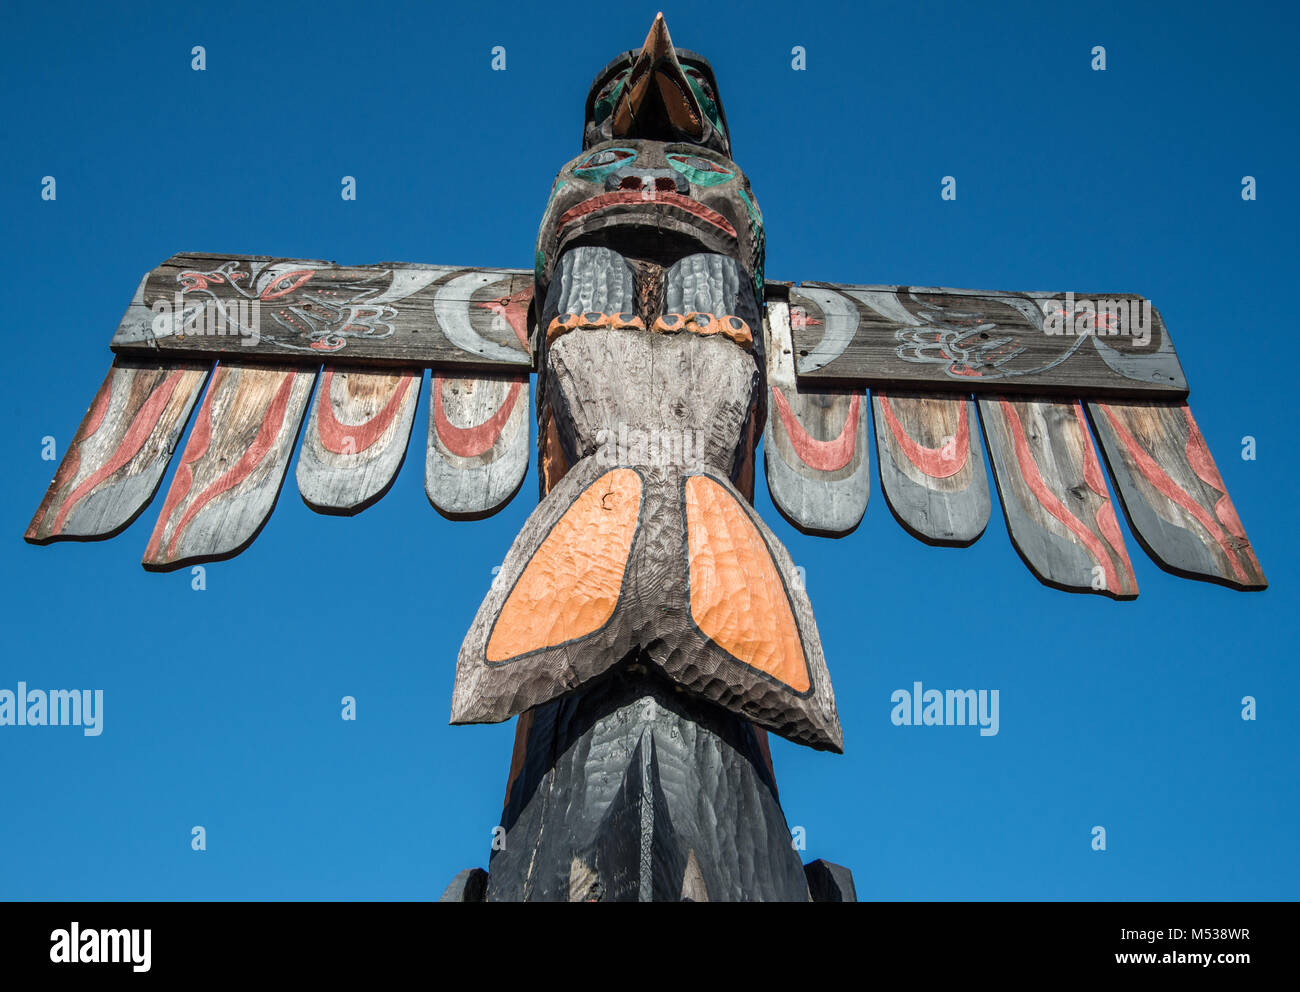 Totem pole at Duncan British Columbia Stock Photo - Alamy